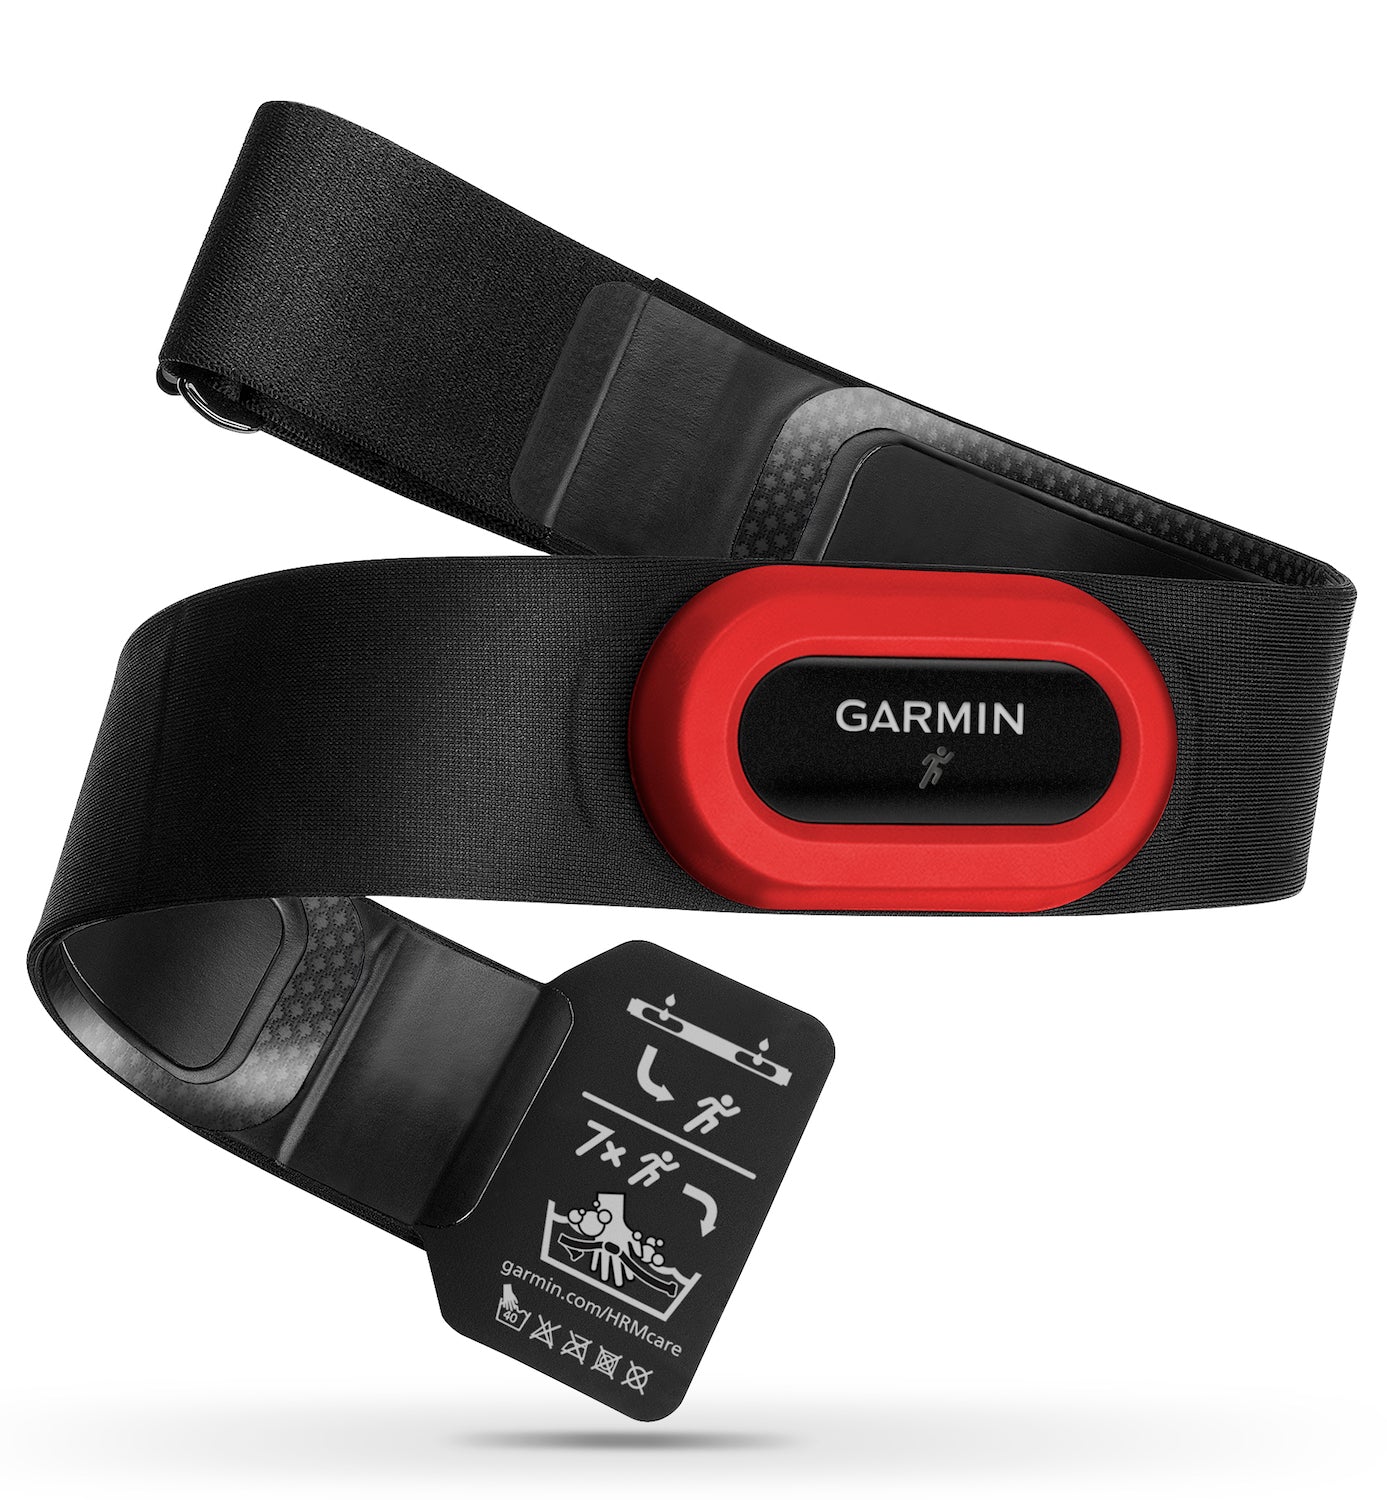 Garmin Watch Hrm-run